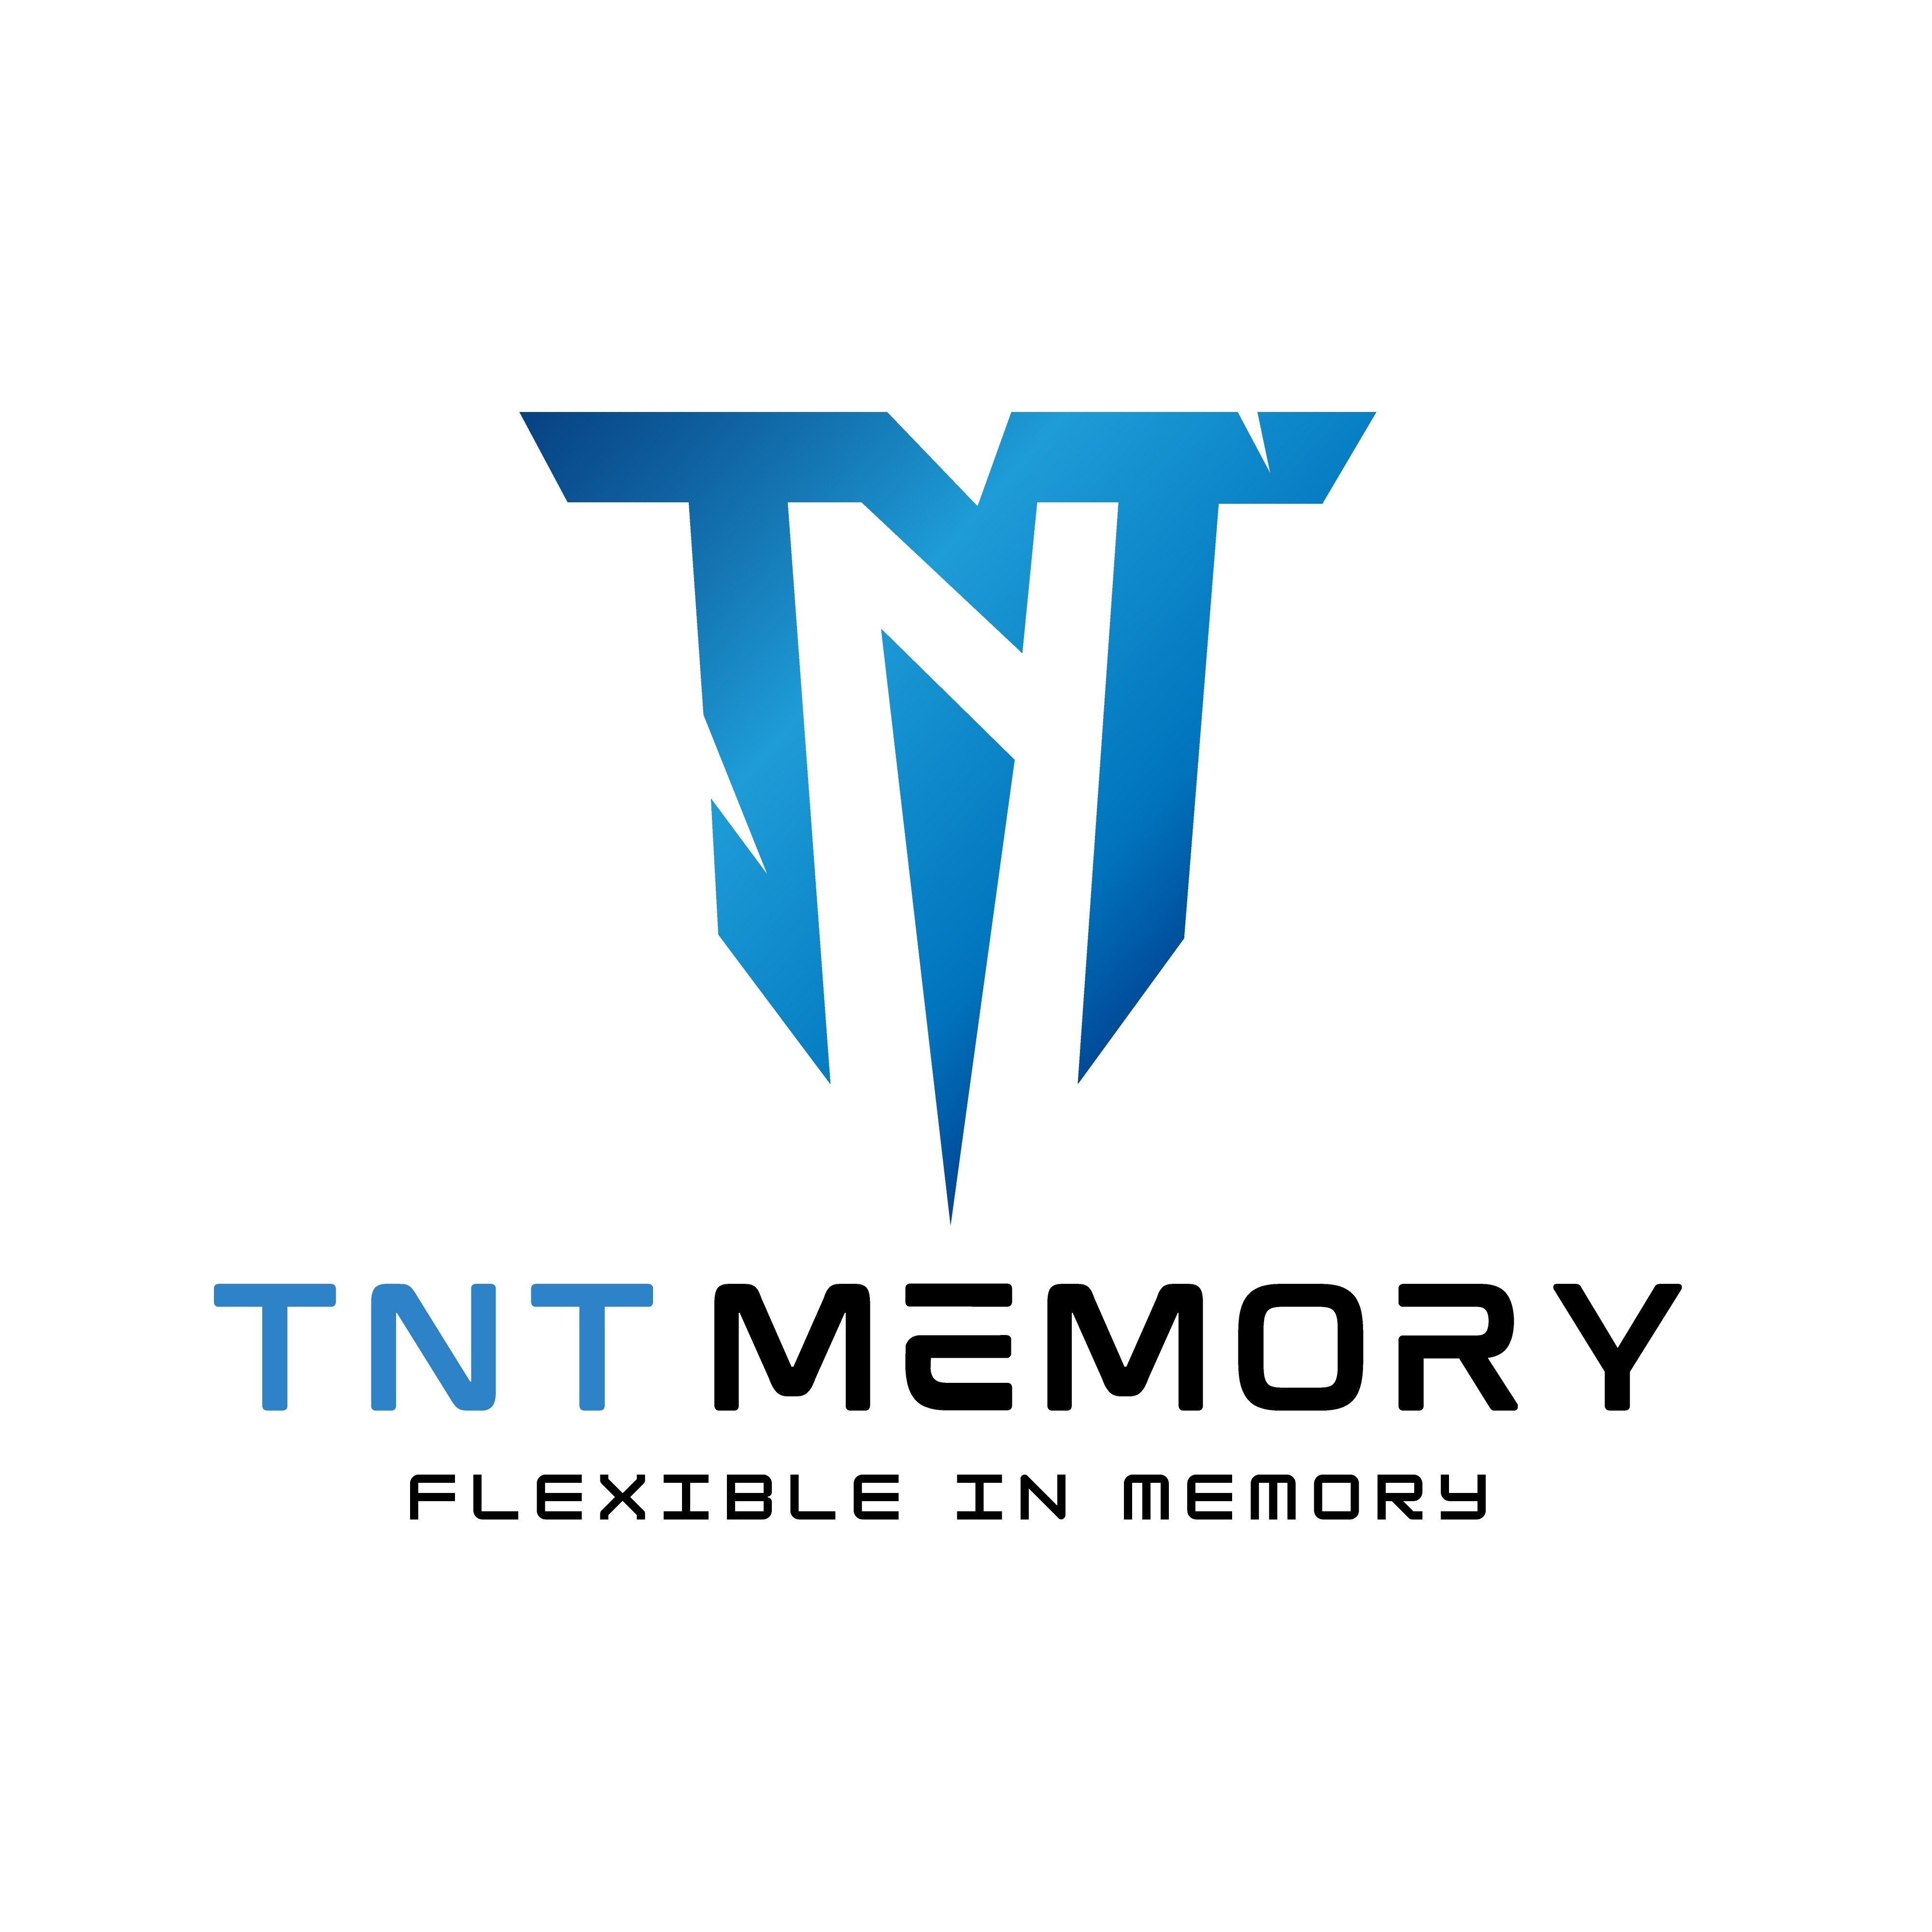 TNT Memory